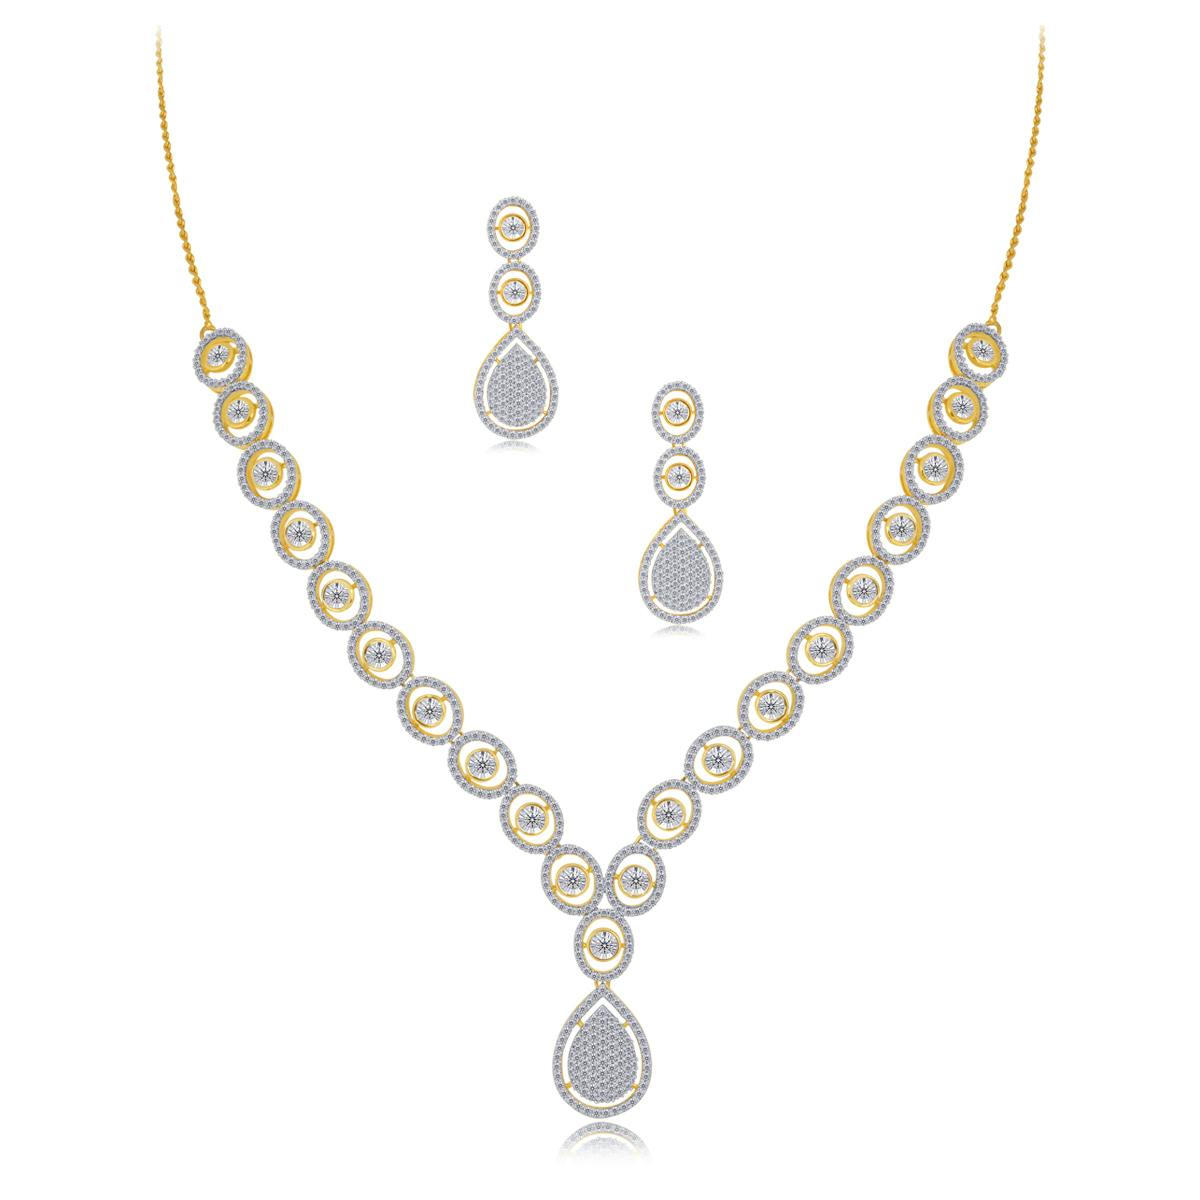 Emery diamond necklace